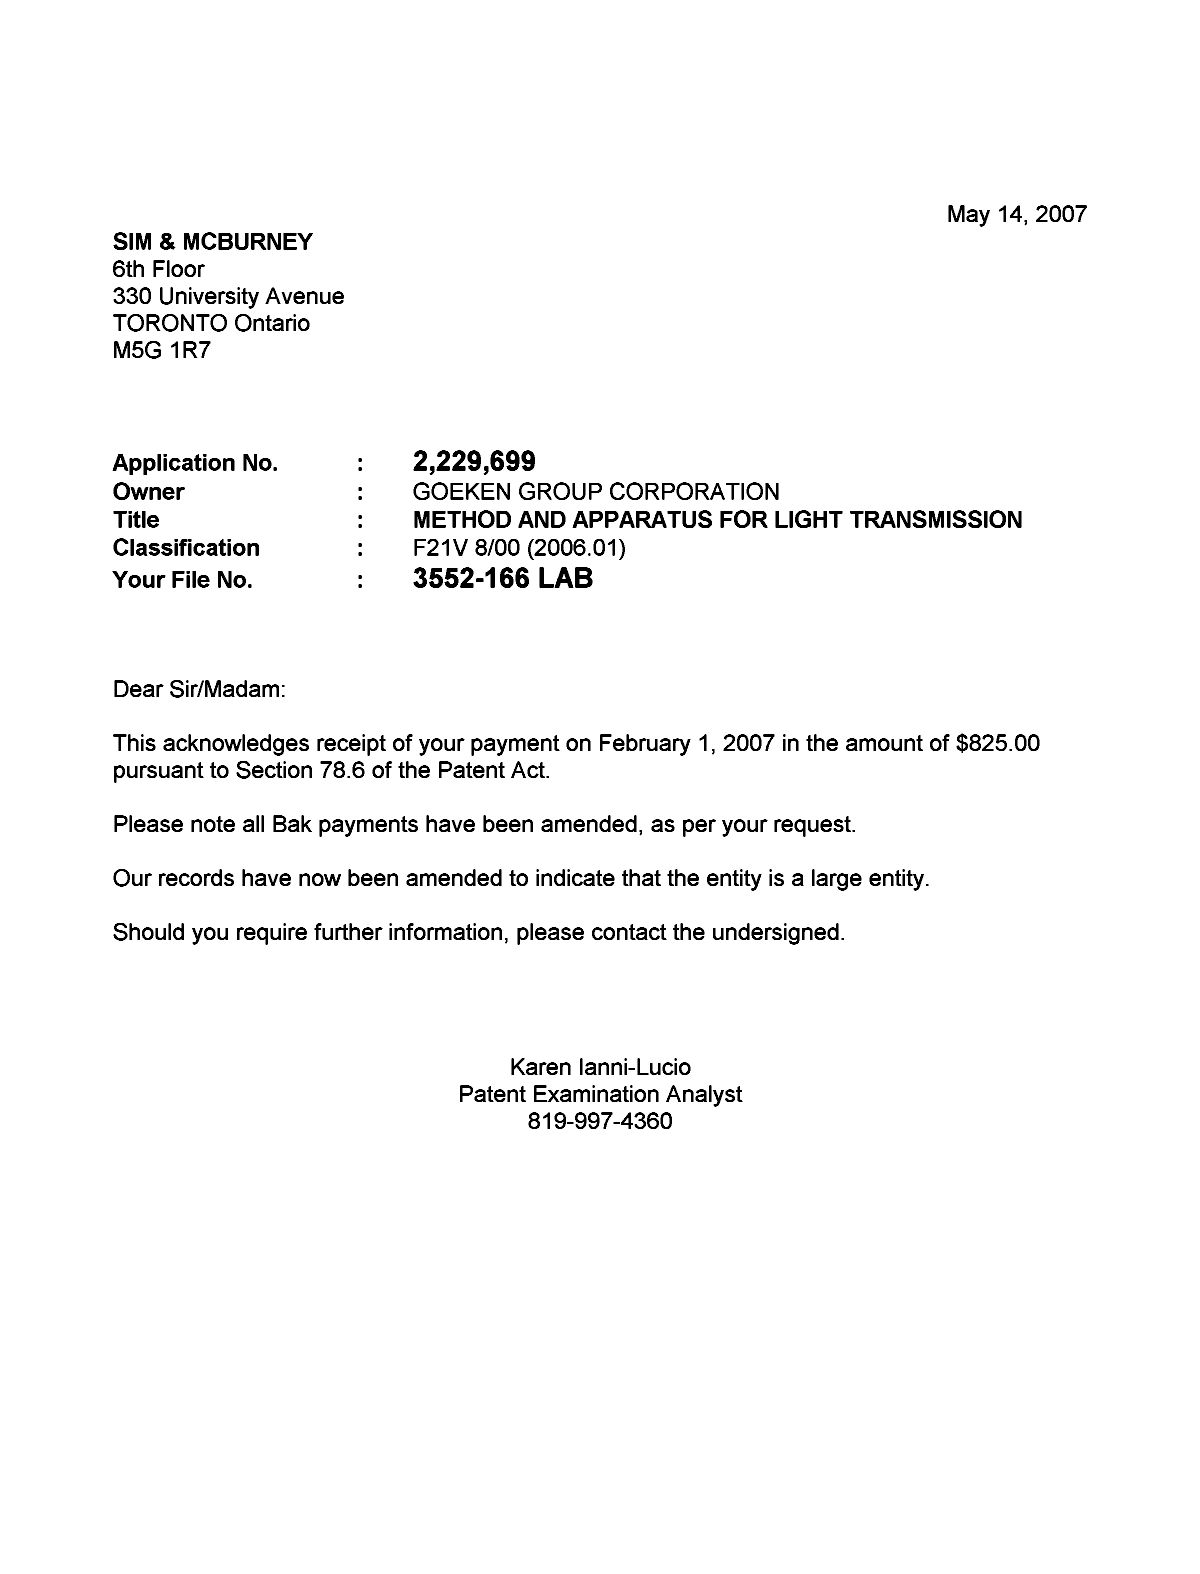 Canadian Patent Document 2229699. Correspondence 20070514. Image 1 of 1